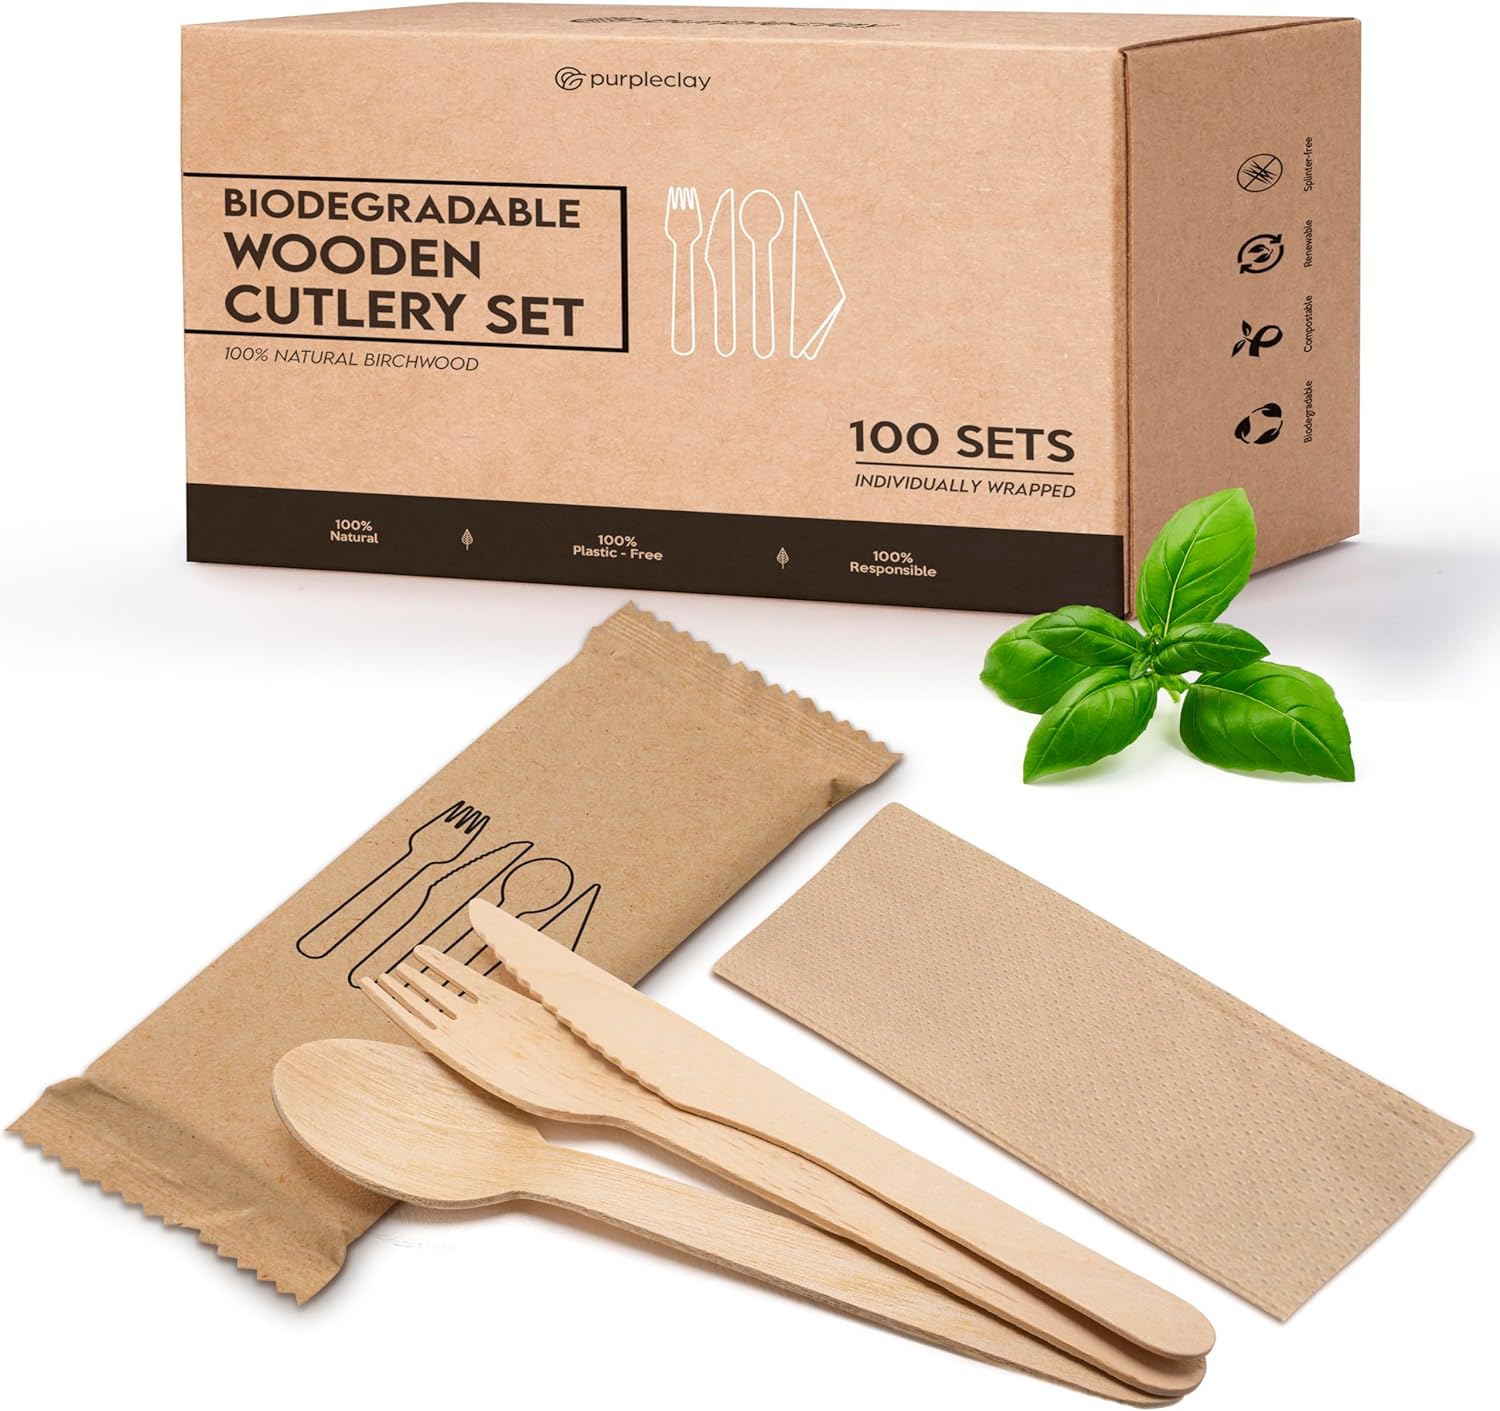 Biodegradable wooden cutlery set